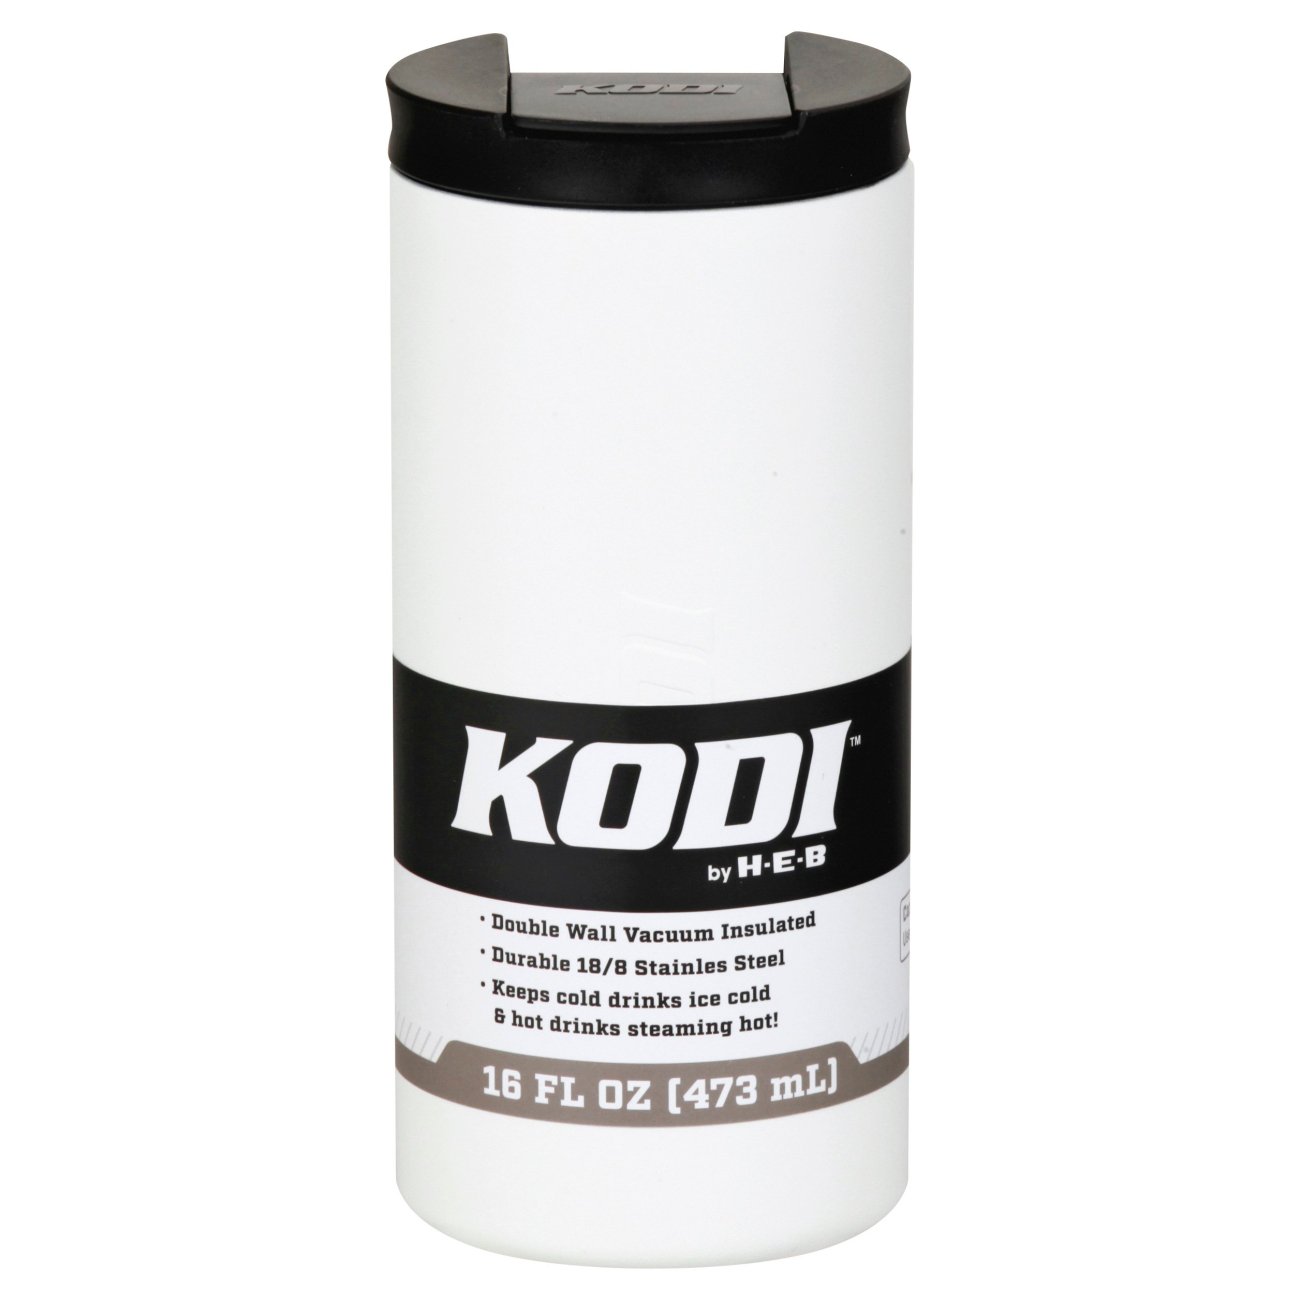 KODI by H-E-B White Matte Stainless Steel Spill Proof Travel Mug